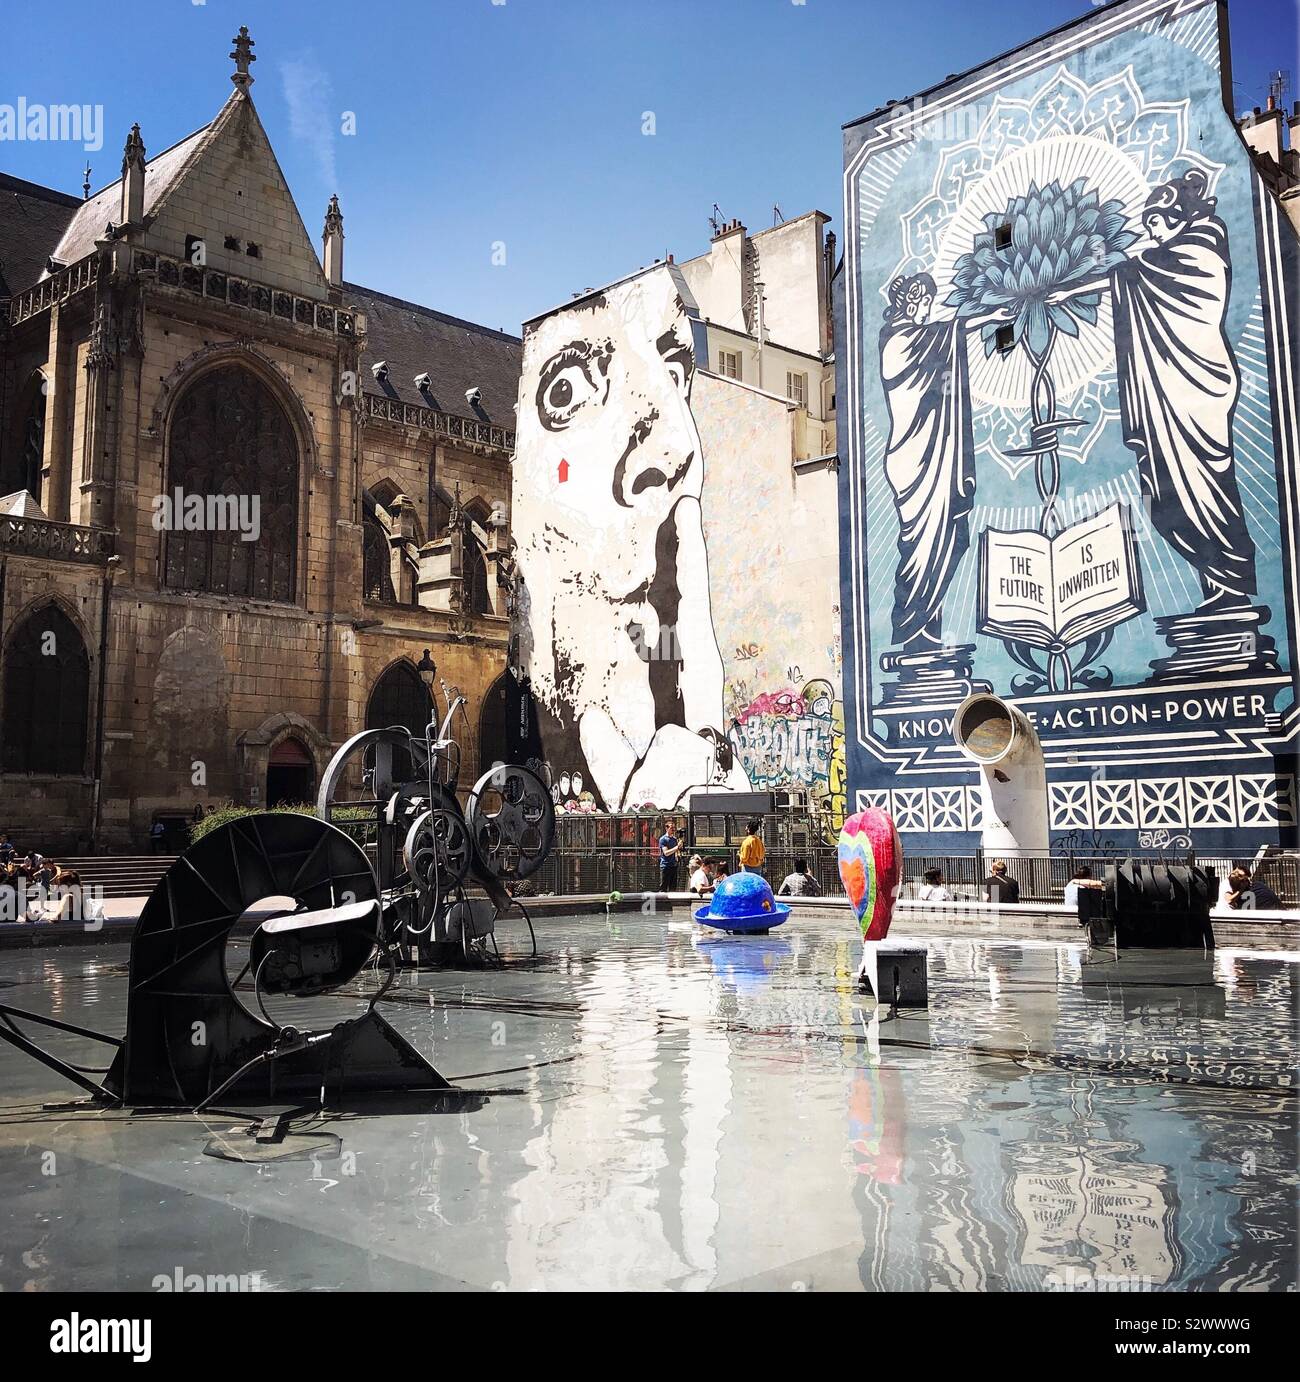 Sculture in fontana con pitture murali in piazza fuori del museo Pompidou di Parigi. Foto Stock